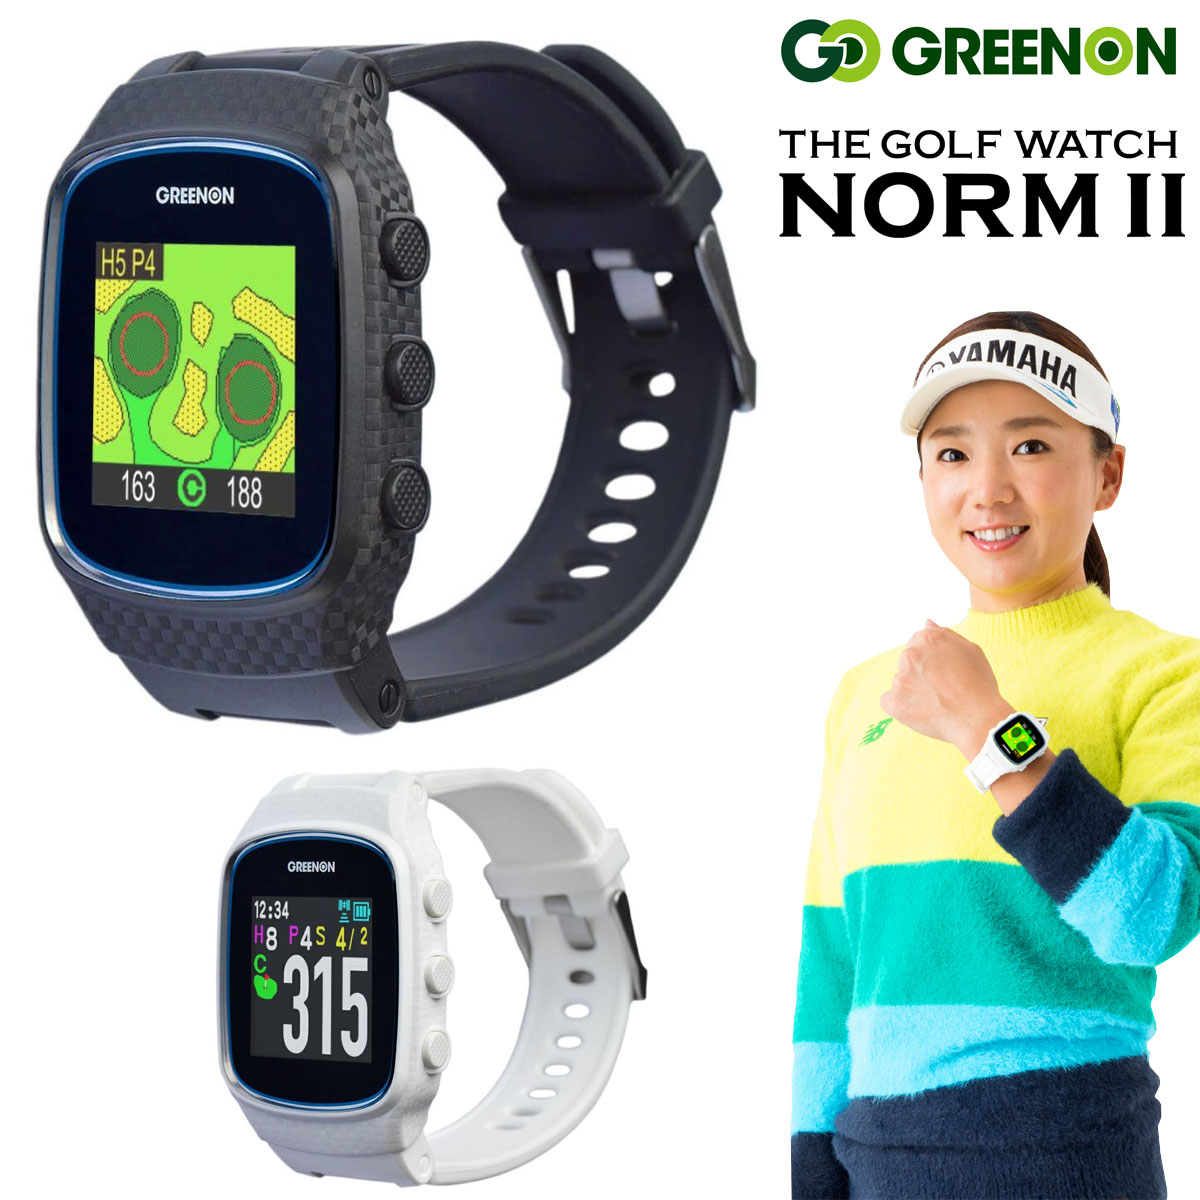 GreenOn グリーンオン 正規品 THE GOLF WATCH NORM II ザ ゴルフウォッチノルム2 GPS ゴルフナビ 「 腕時計型GPS距離測定器 」 【あす楽対応】